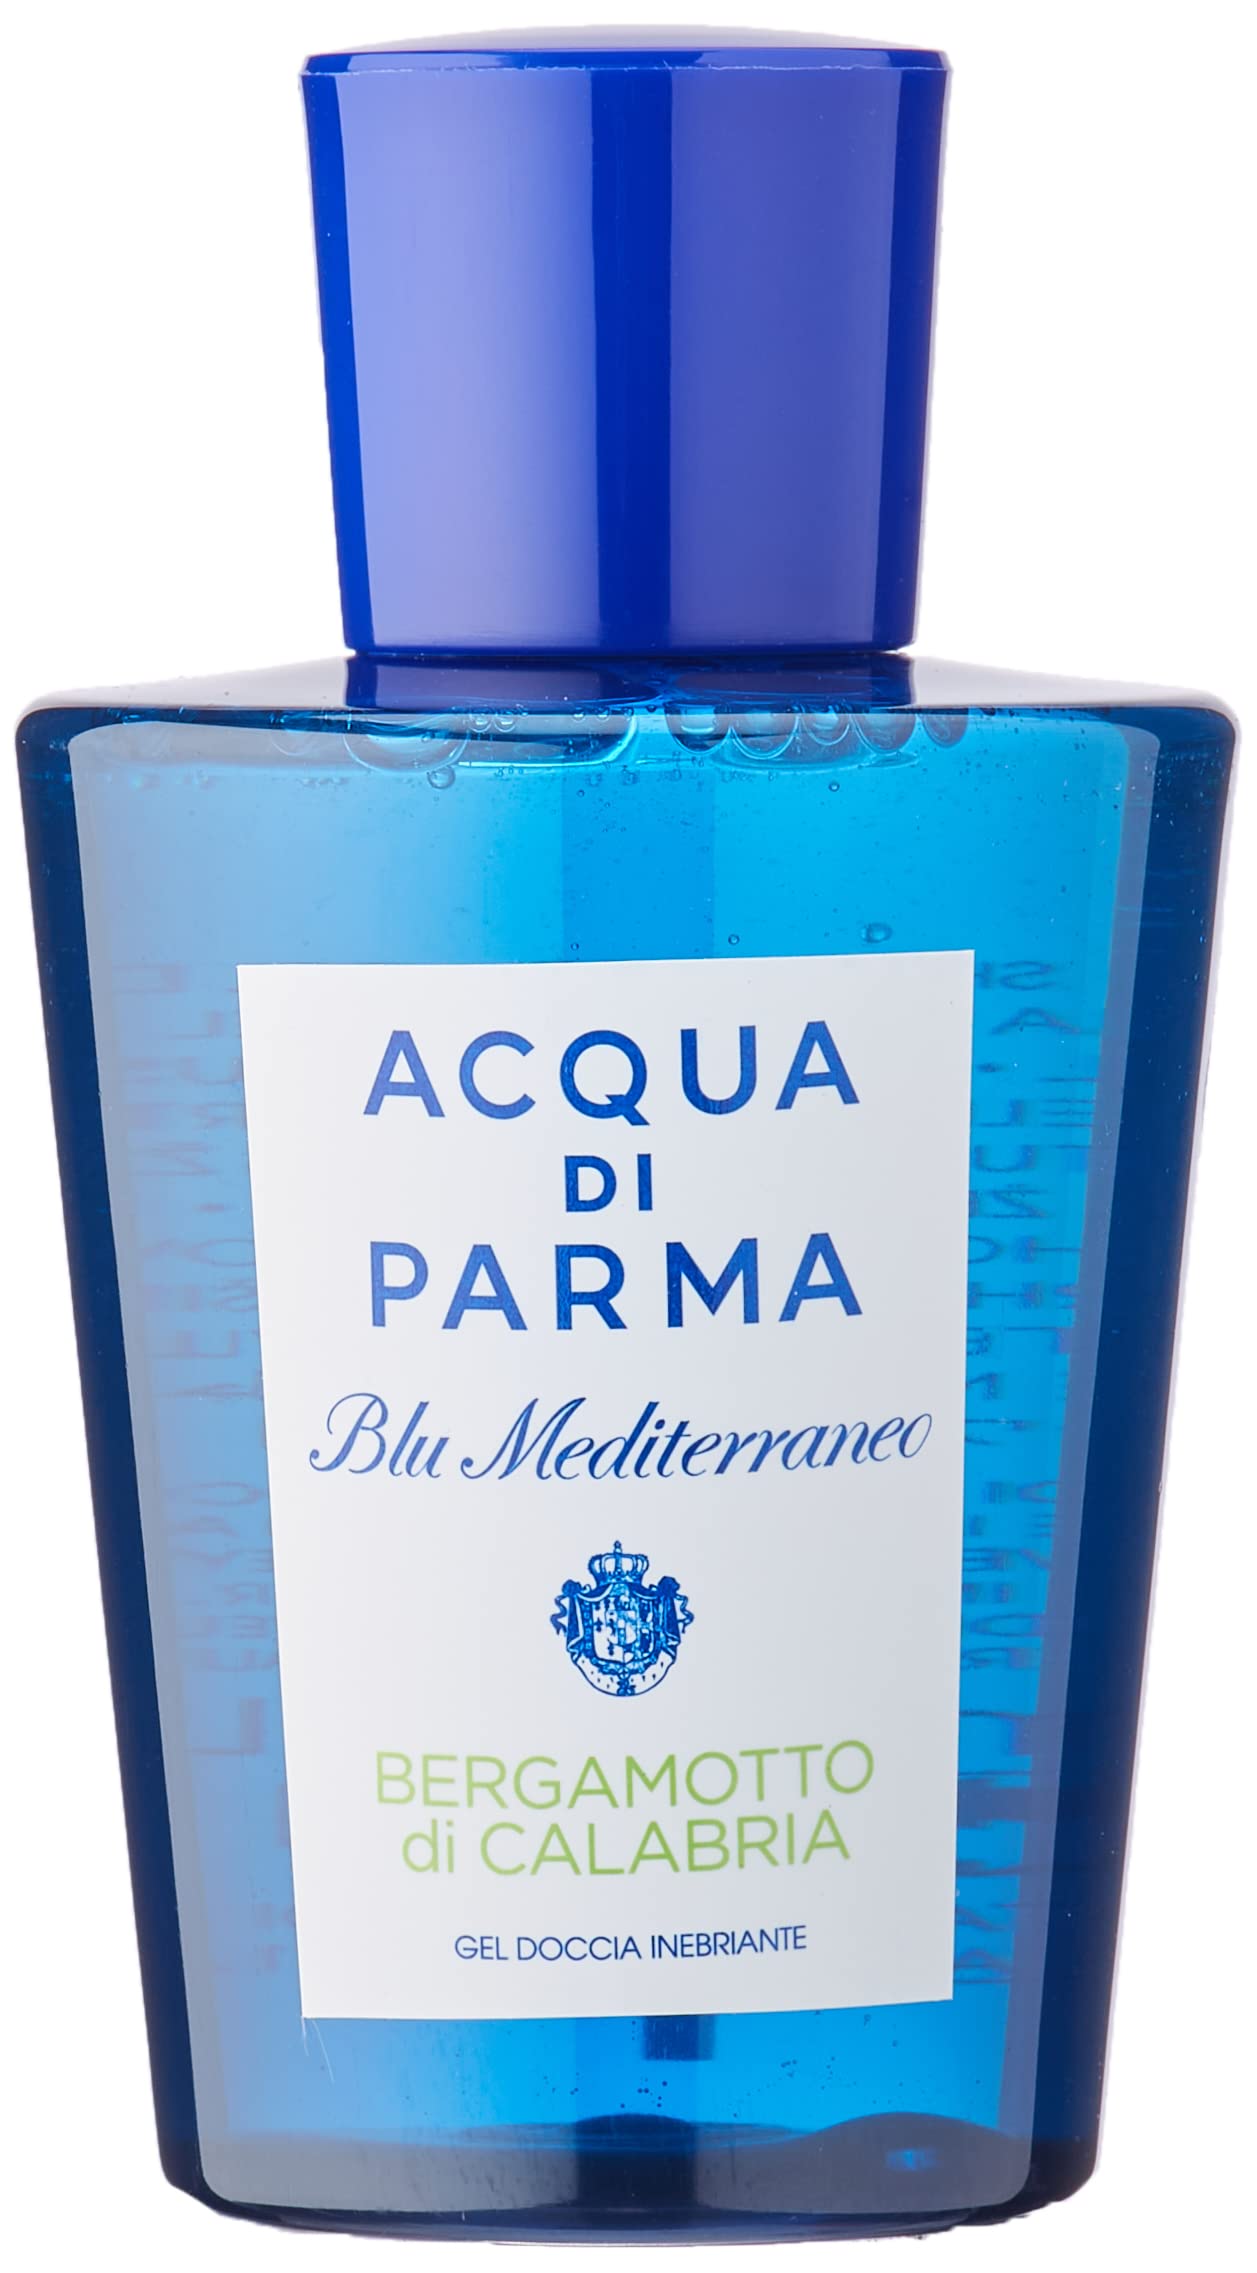 Acqua Di Parma Blu Mediterraneo Bergamotto Di Calabria Exhilarating Shower Gel, 6.7 Ounce